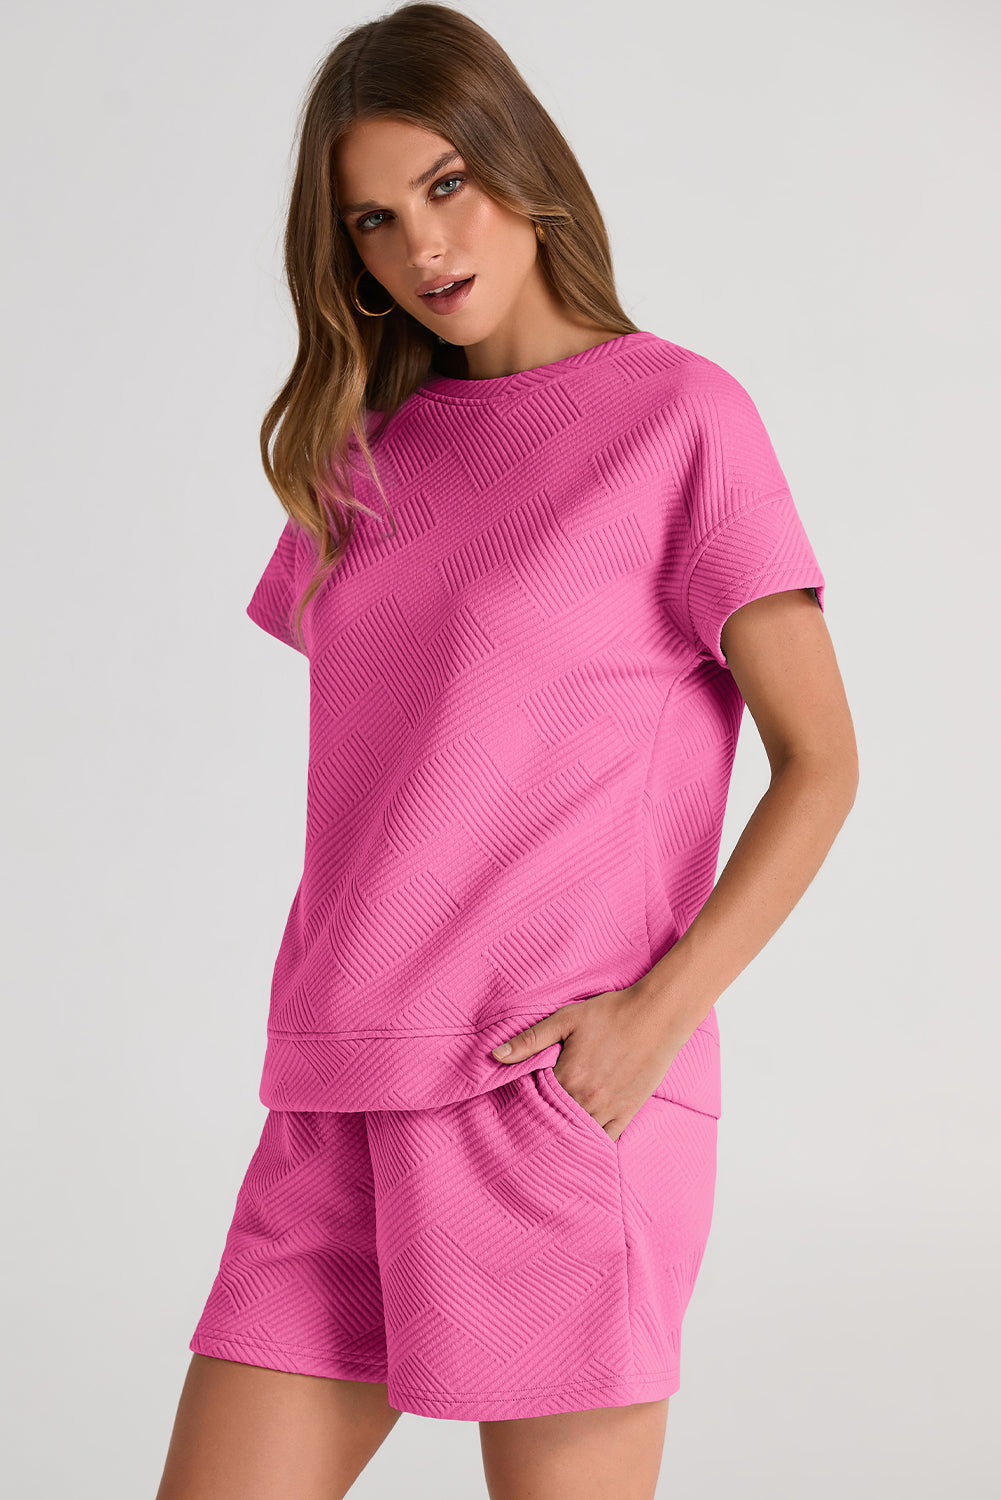 Strawberry Pink 2pcs Solid Textured Drawstring Shorts Set Pre Order Bottoms JT's Designer Fashion